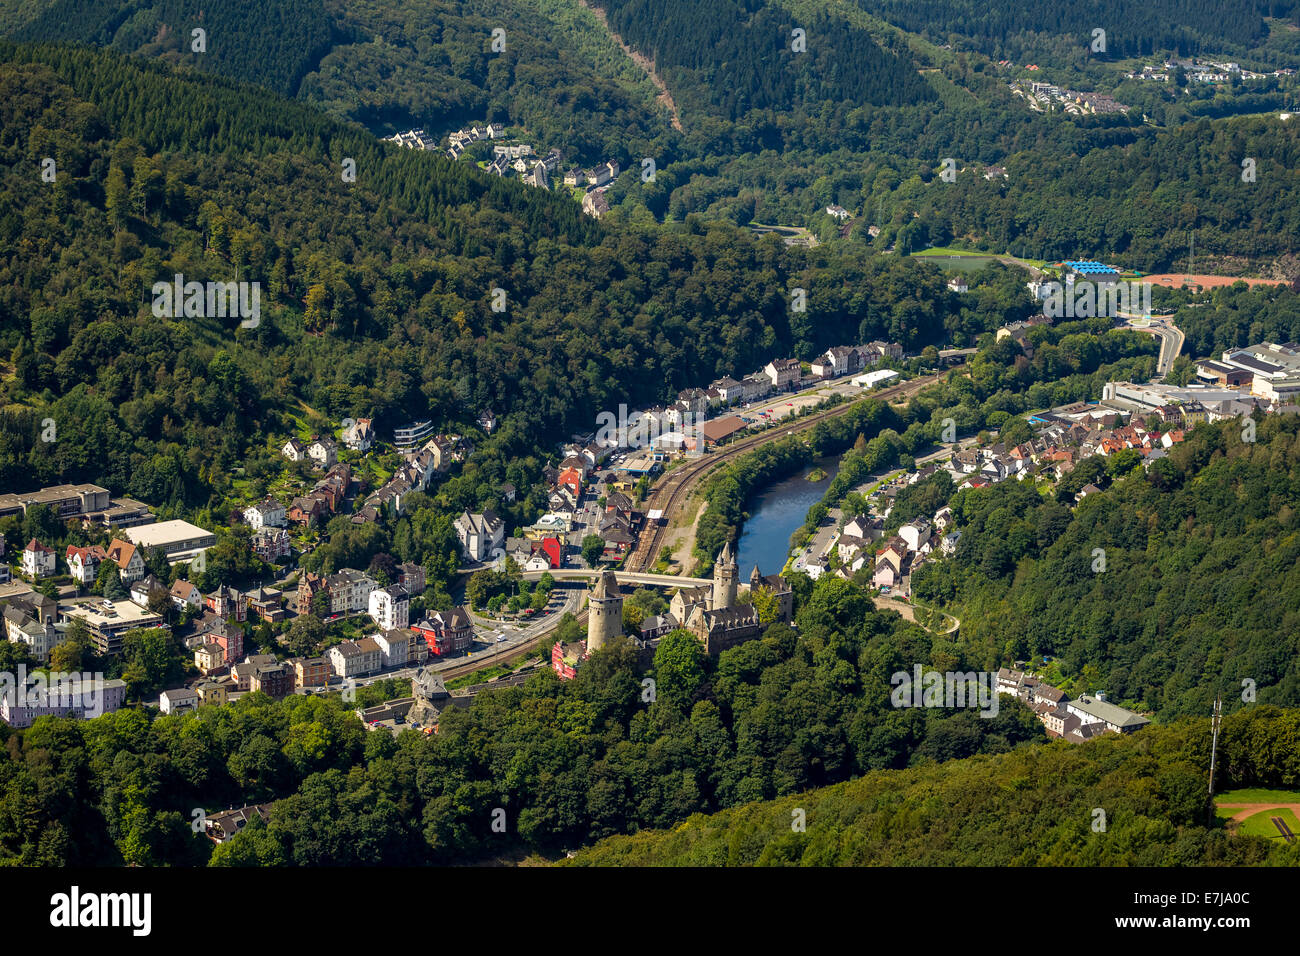 Vista aerea, Lennetal valley e Burg Altena castello, Altena, Sauerland, Nord Reno-Westfalia, Germania Foto Stock